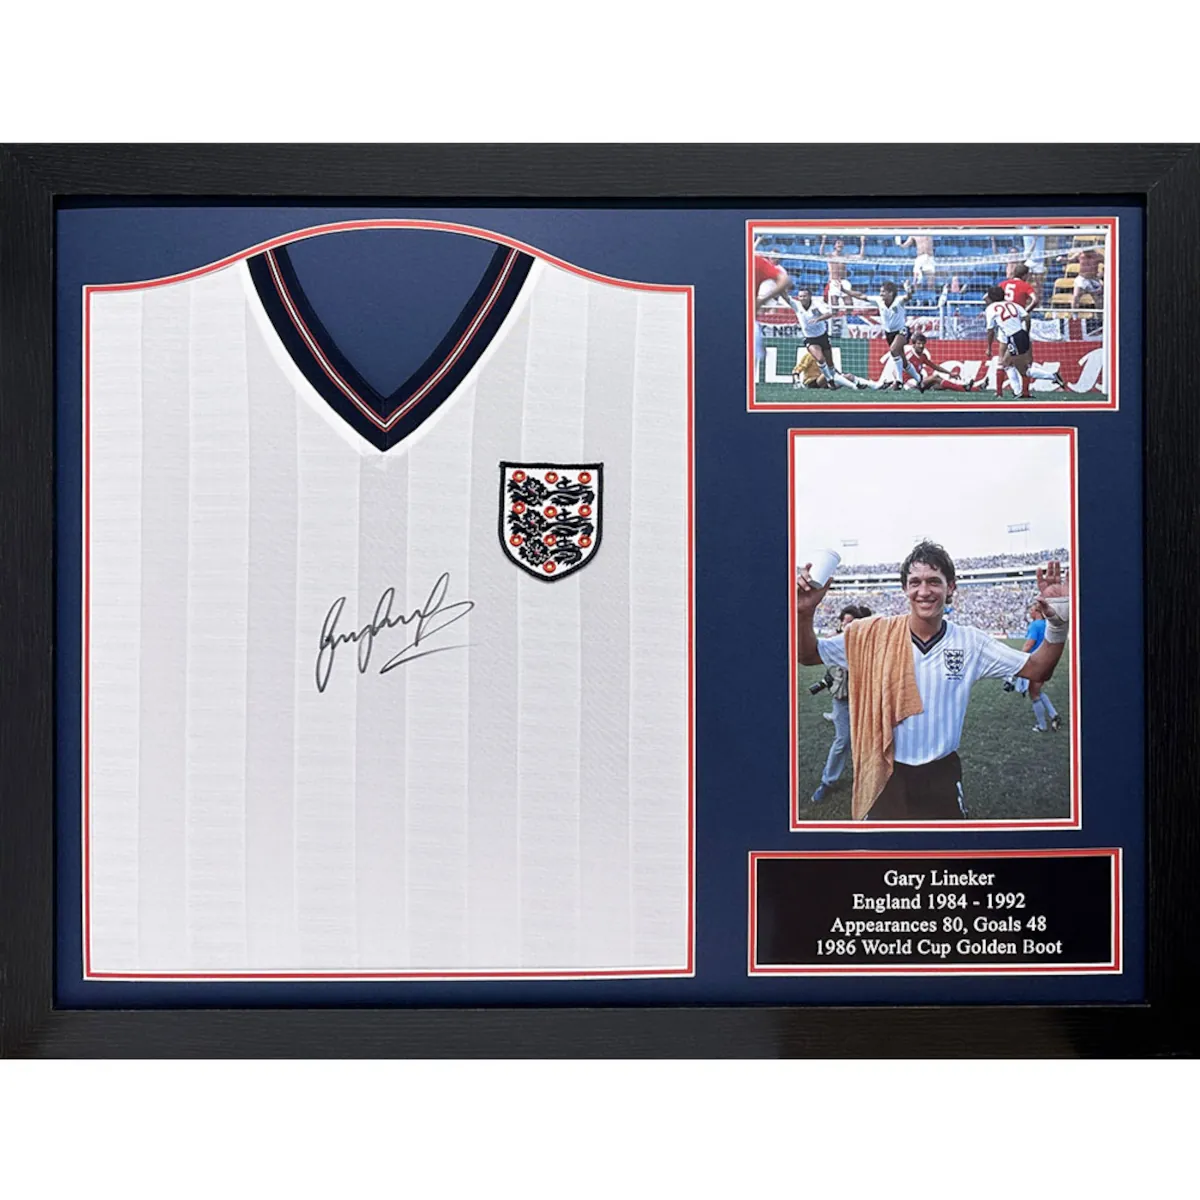 TM-03195 England F.A. Gary Lineker Framed Signed 1986 World Cup Replica Football Shirt